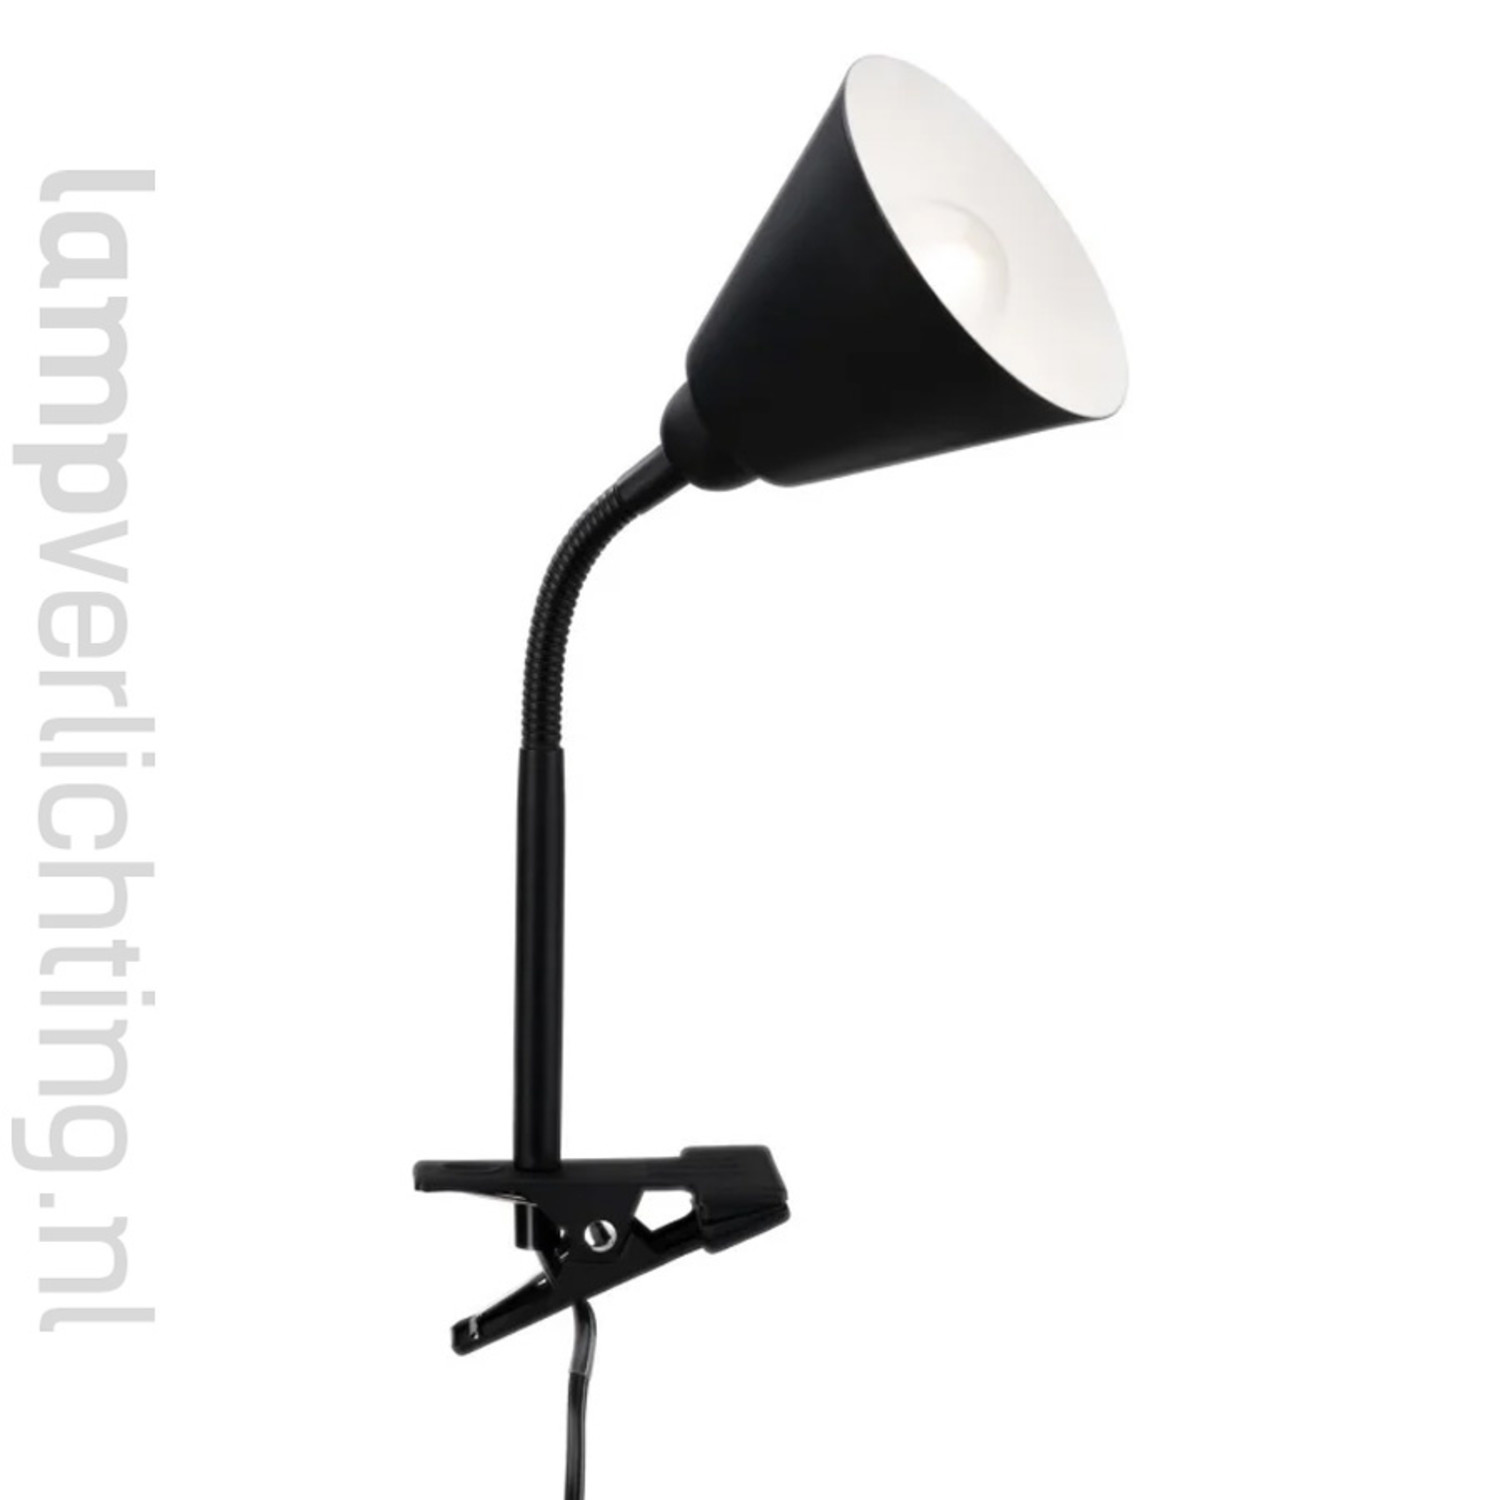 Klemspot E14 met LED lamp - klemspot met grote lampenkap - Tip - LampVerlichting.nl